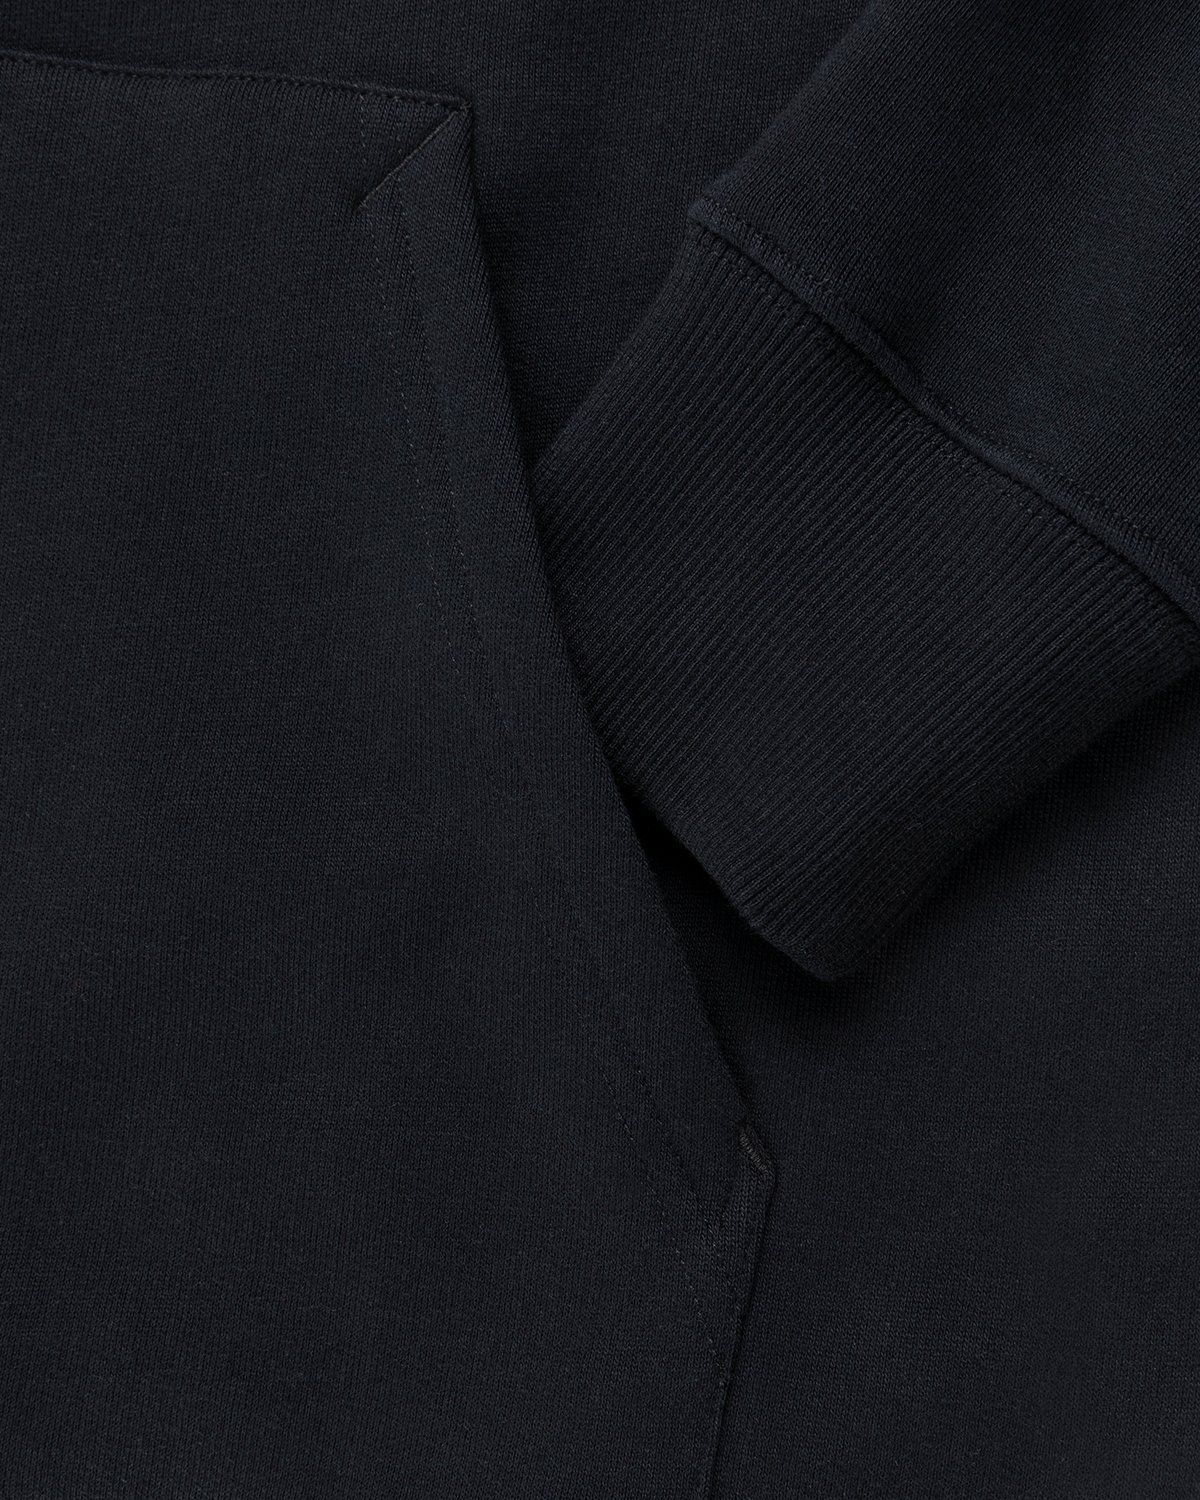 J.W. Anderson – Classic Logo Hoodie Black - Sweats - Black - Image 5